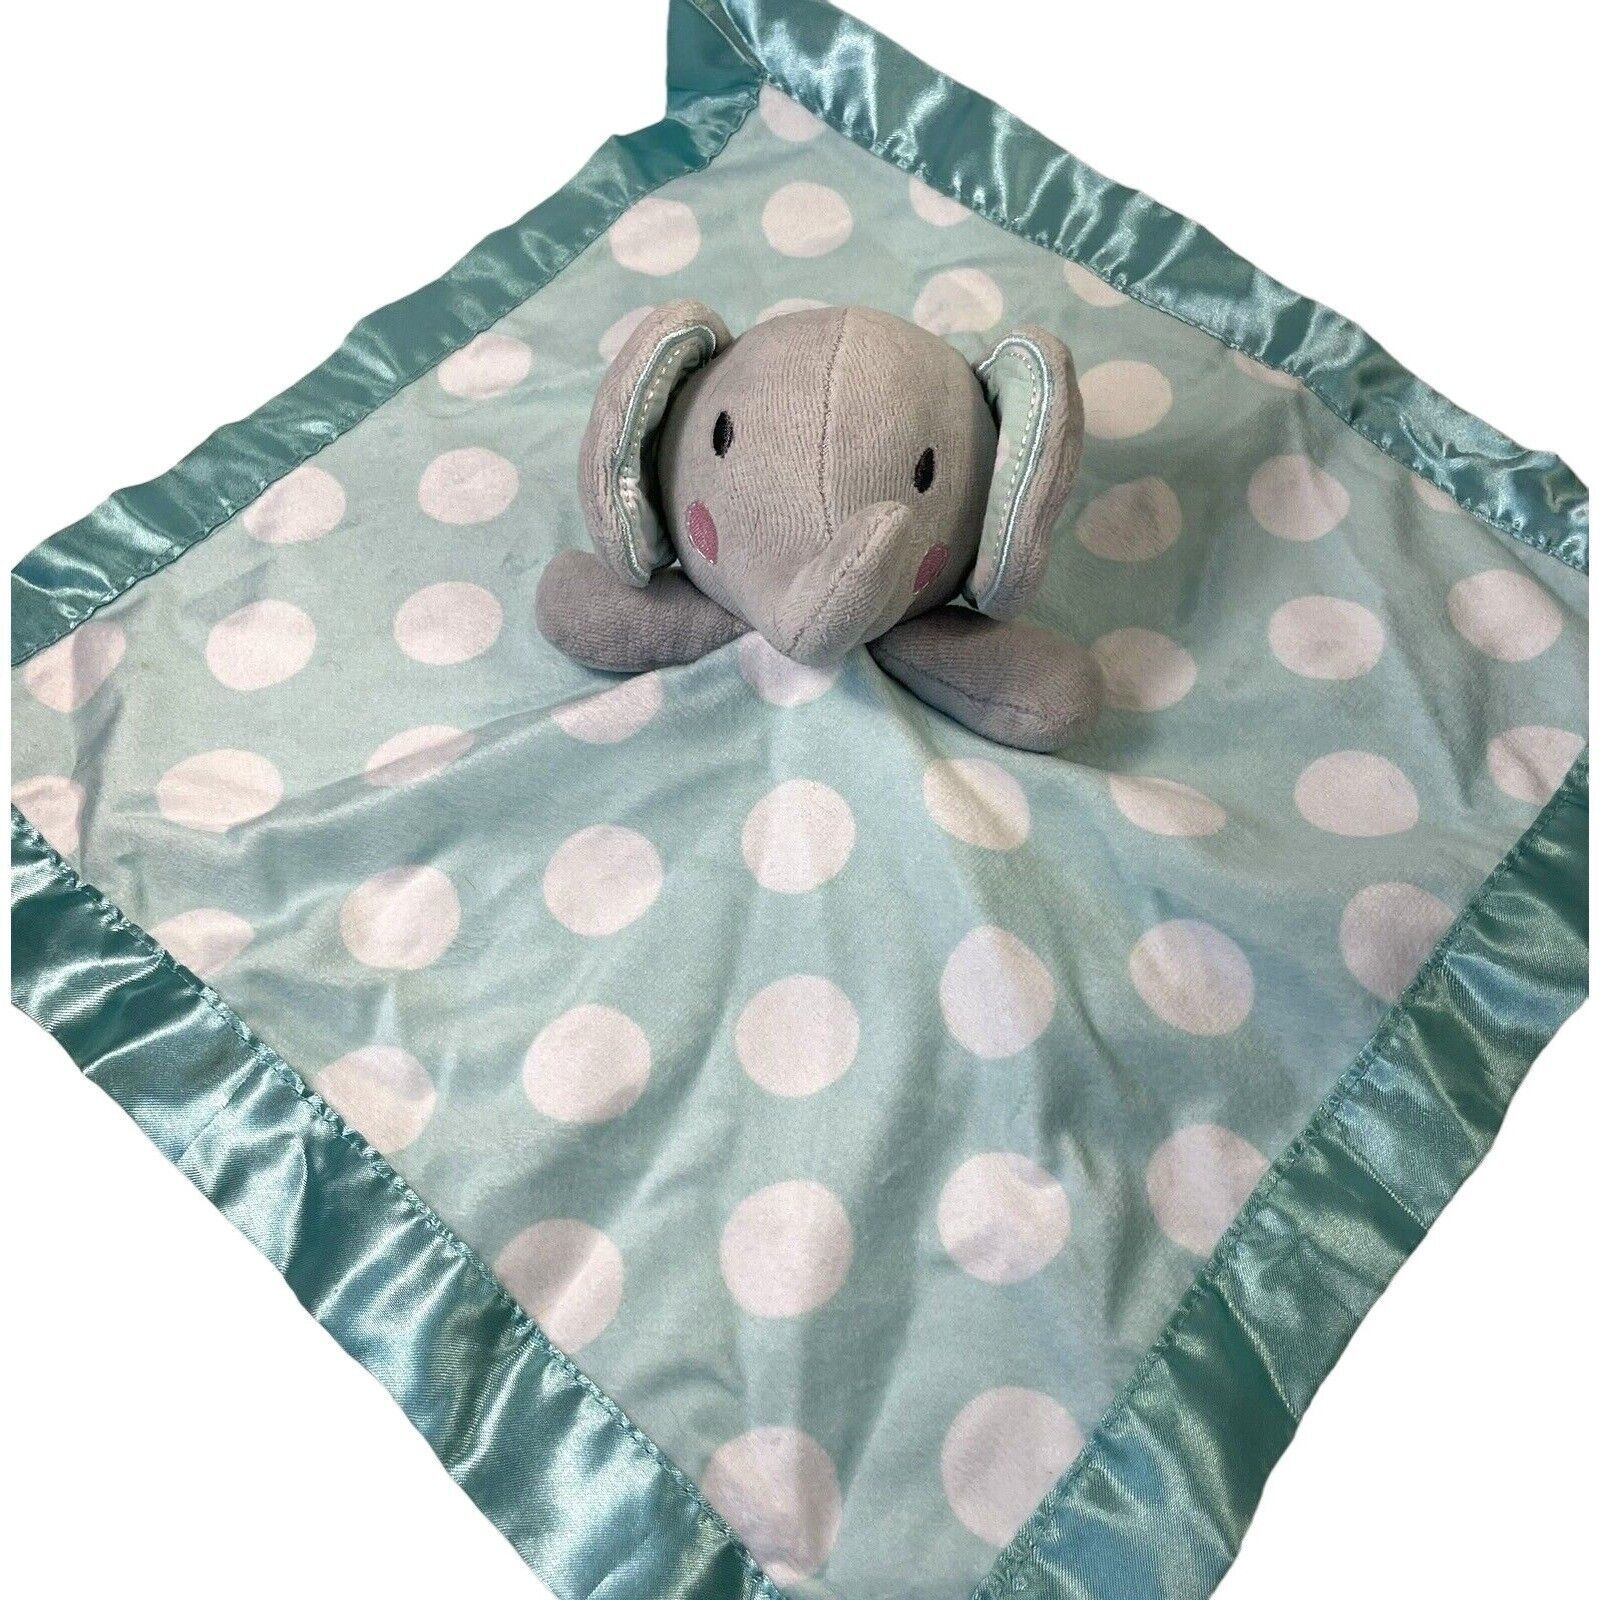 Circo Gray Elephant Lovey Satin Security Baby Blanket Teal Blue Polka Dot 2013 - $16.82